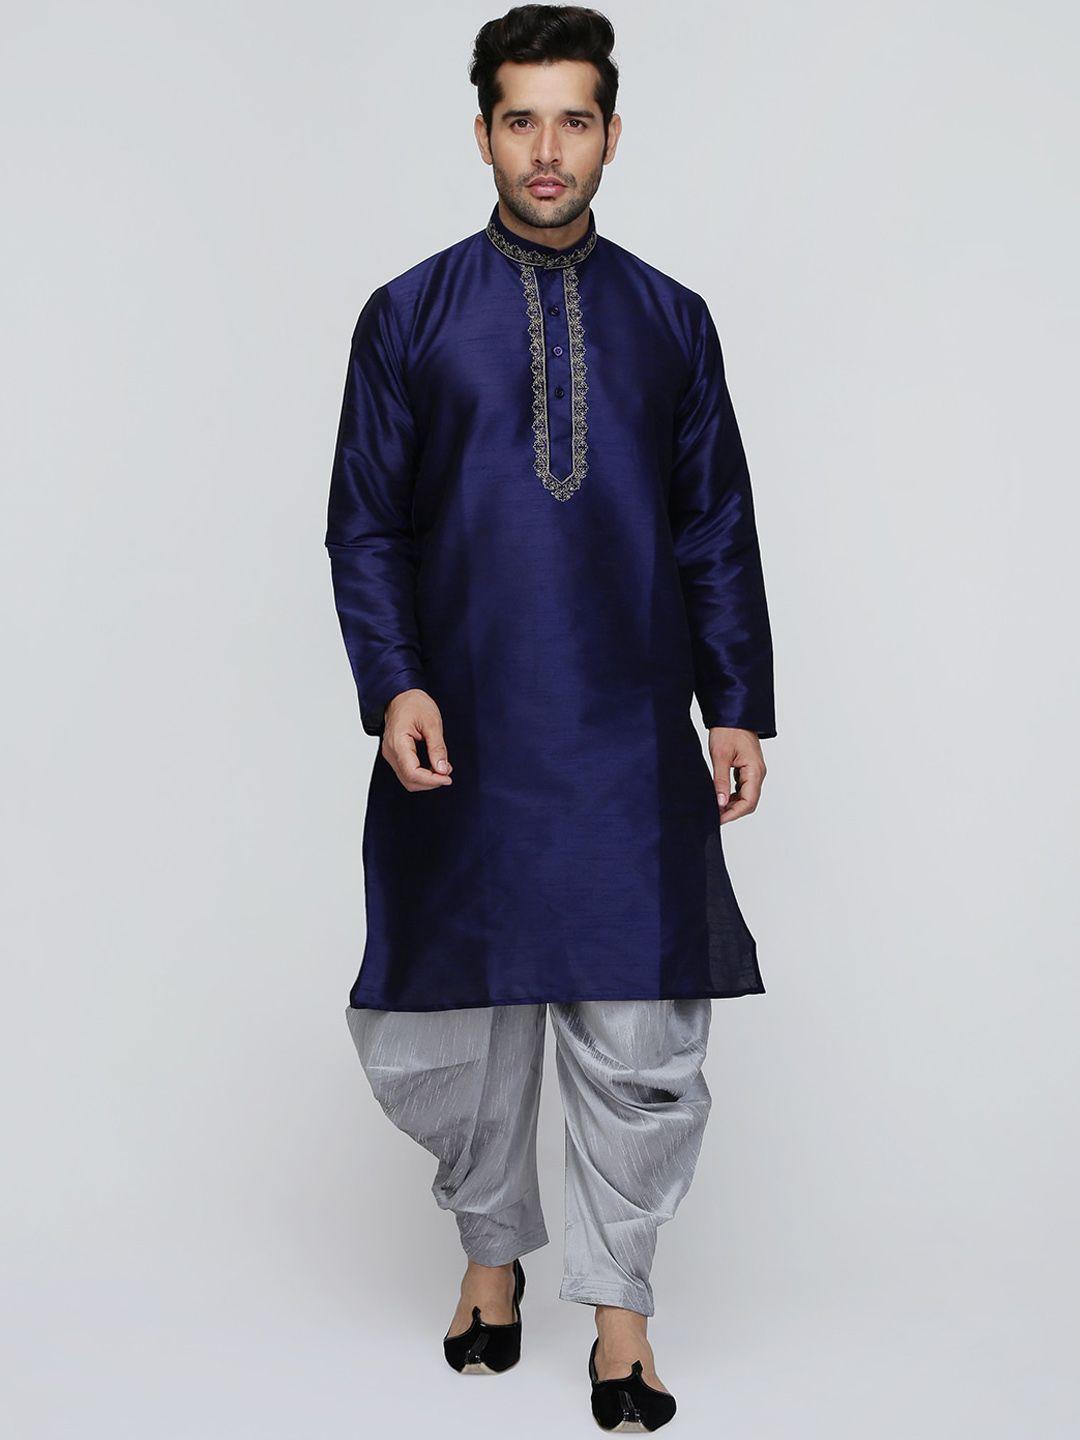 royal kurta yoke design mandarin collar thread work dupion silk kurta with patiala